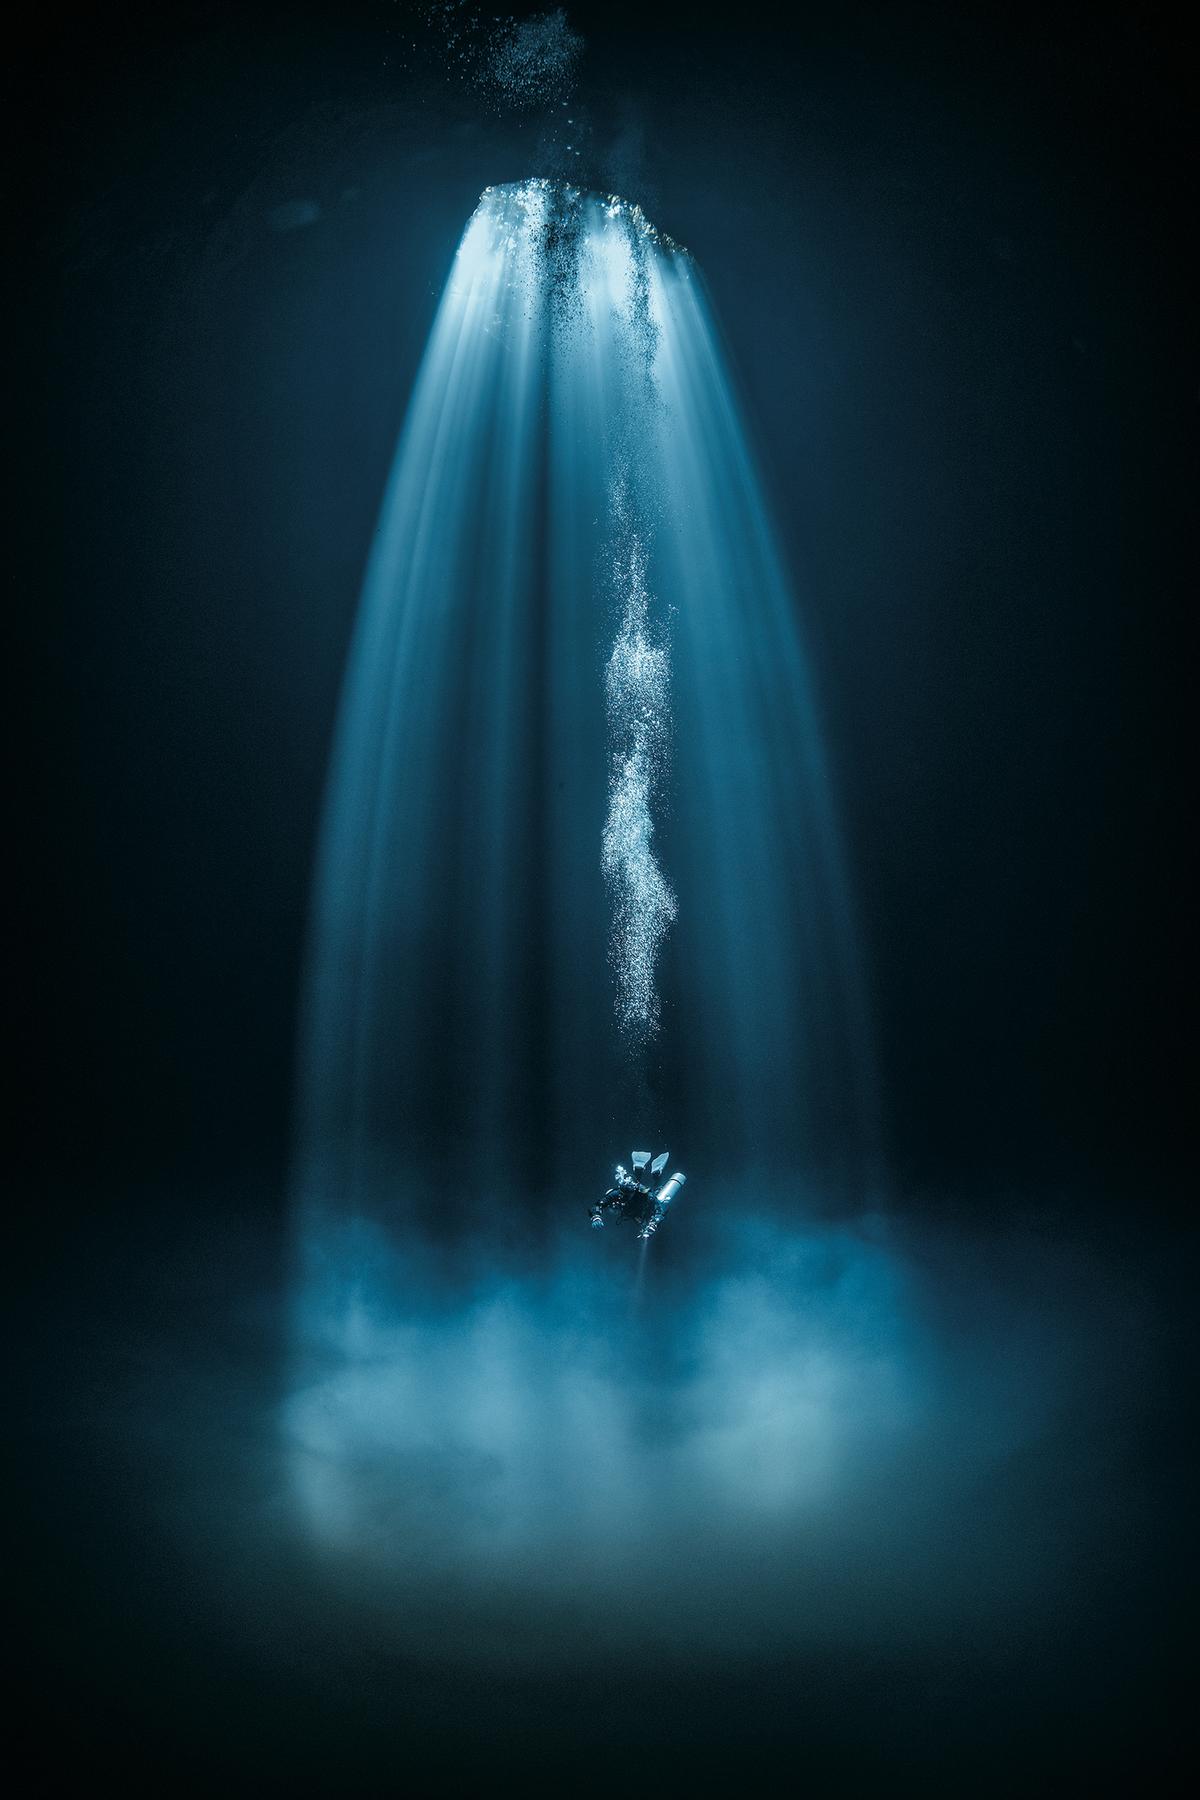  1st Place, Wide-Angle (Courtesy of Martin Strmiska/<a href="https://www.scubadiving.com/scuba-diving-magazines-2020-underwater-photo-contest-winners">Scuba Diving magazine</a>)